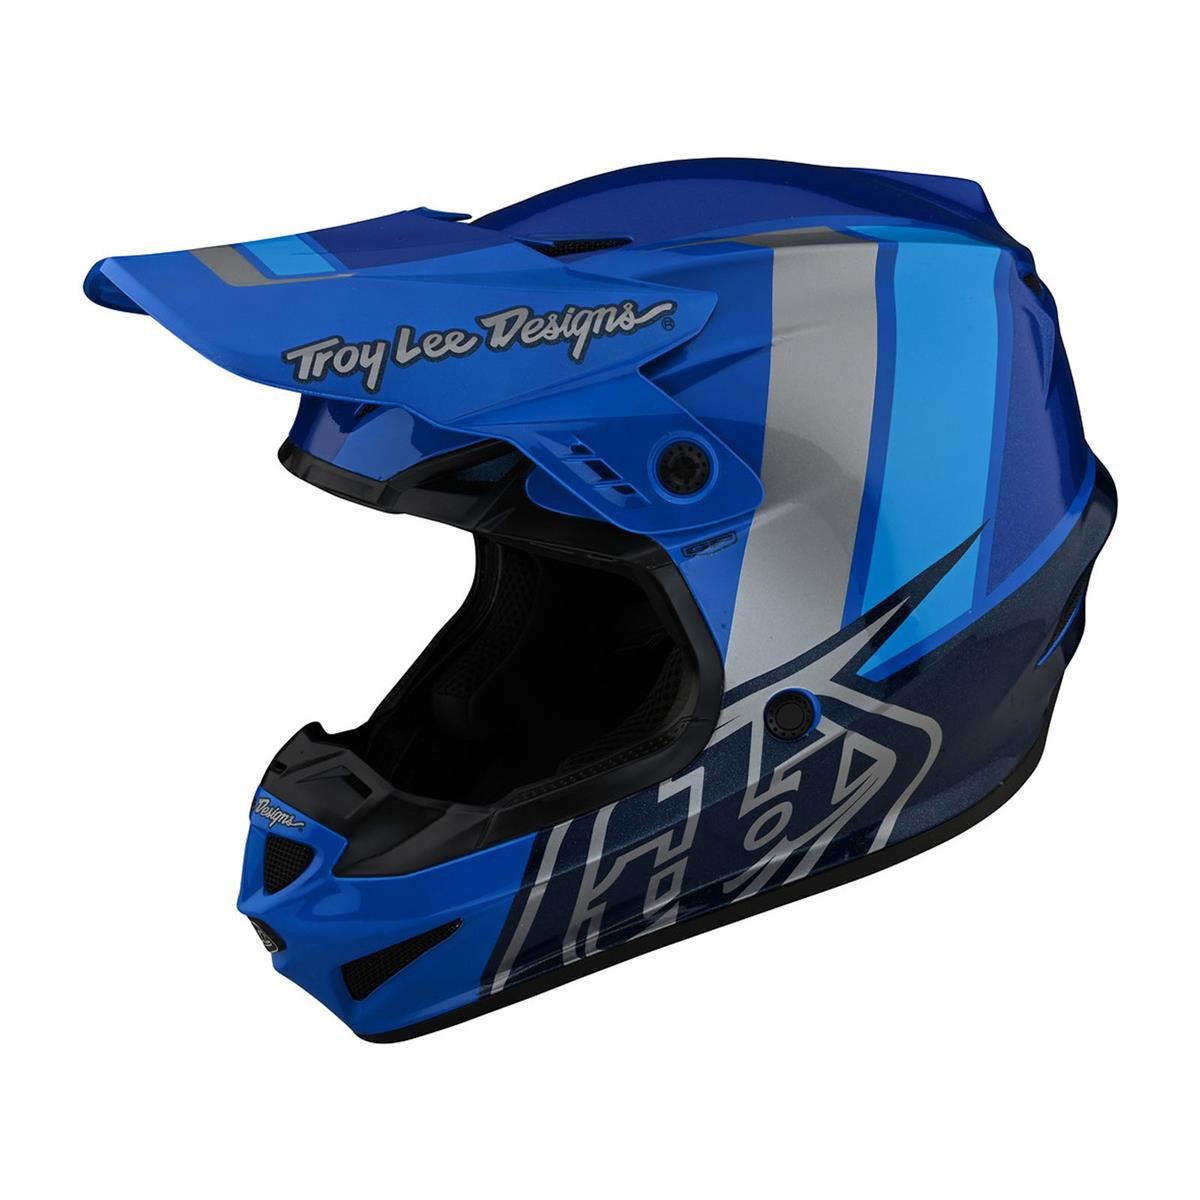 Troy Lee Designs GP Helm- Nova- blue- M - 57-58cm unter Troy Lee Designs